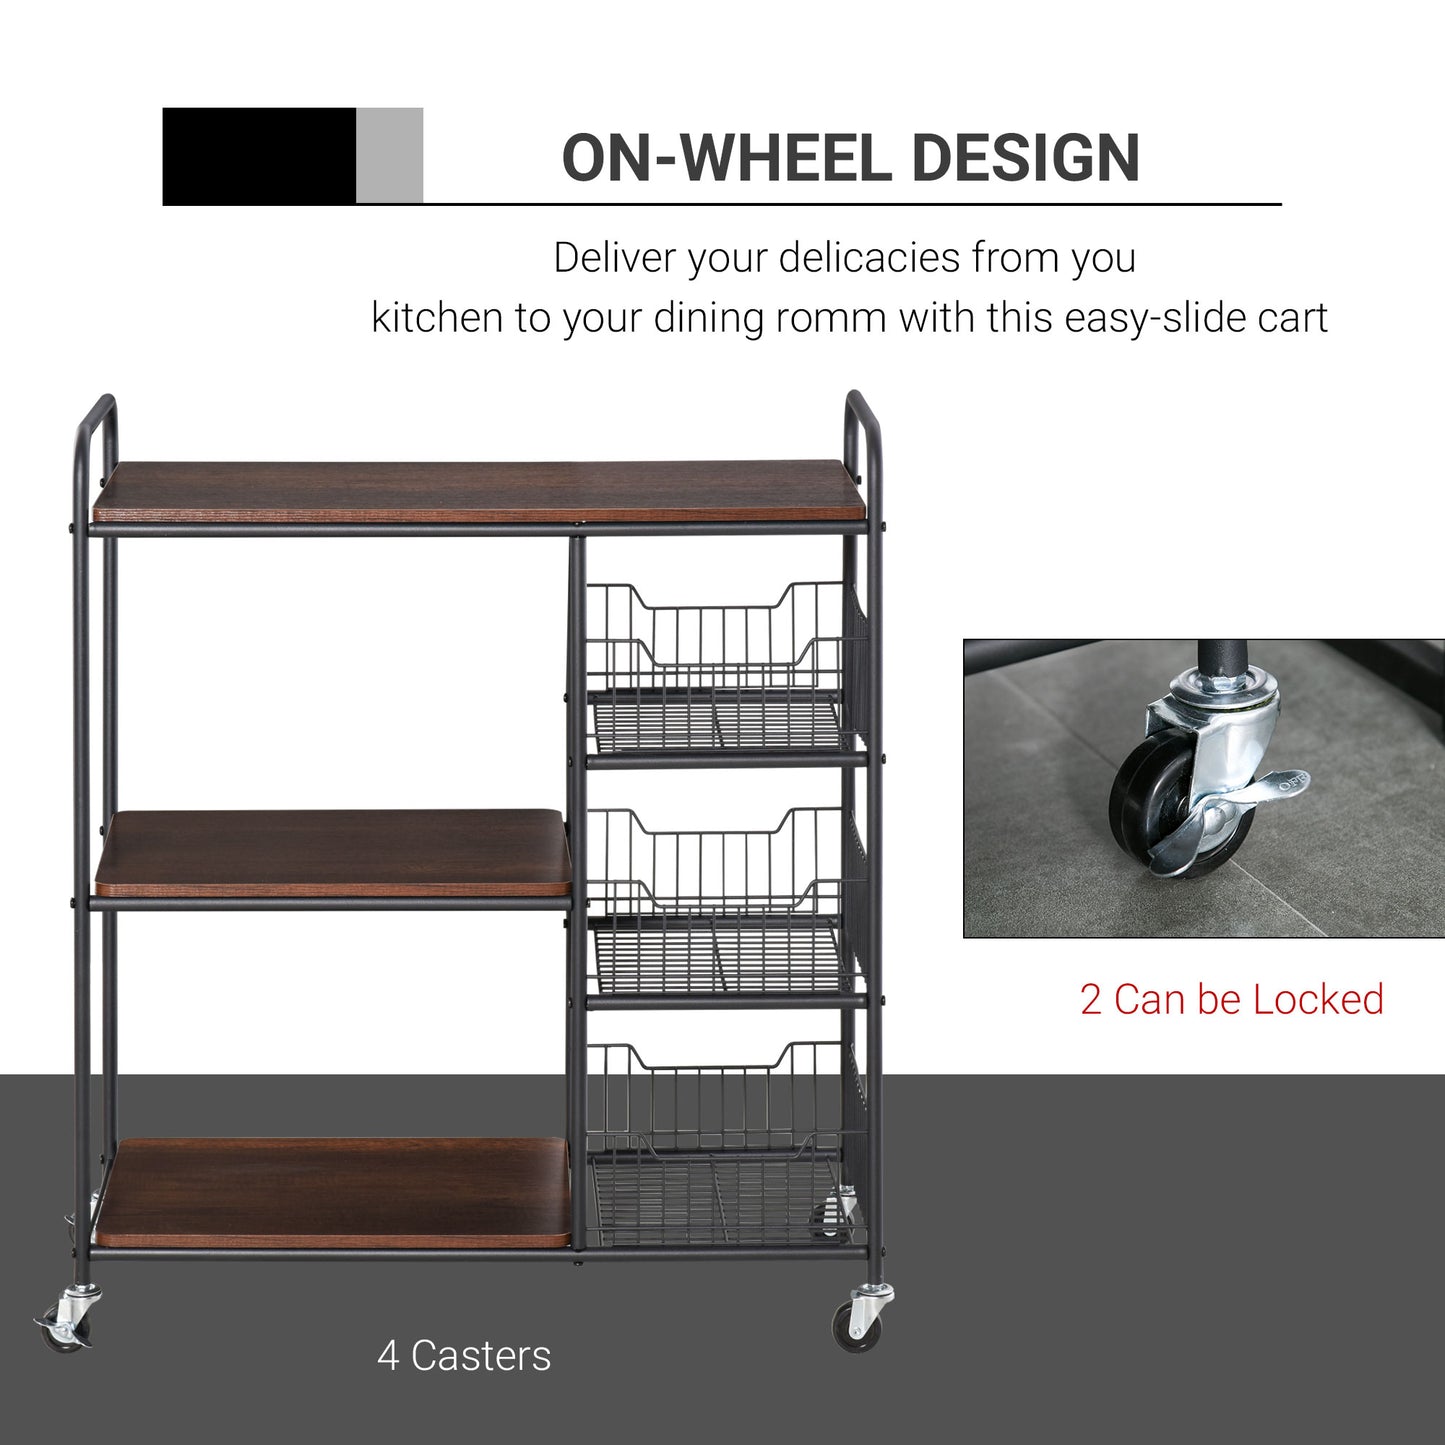 HOMCOM Industrial-Style Kitchen Dining Storage Cart Trolley w/ Shelves Baskets Wheels